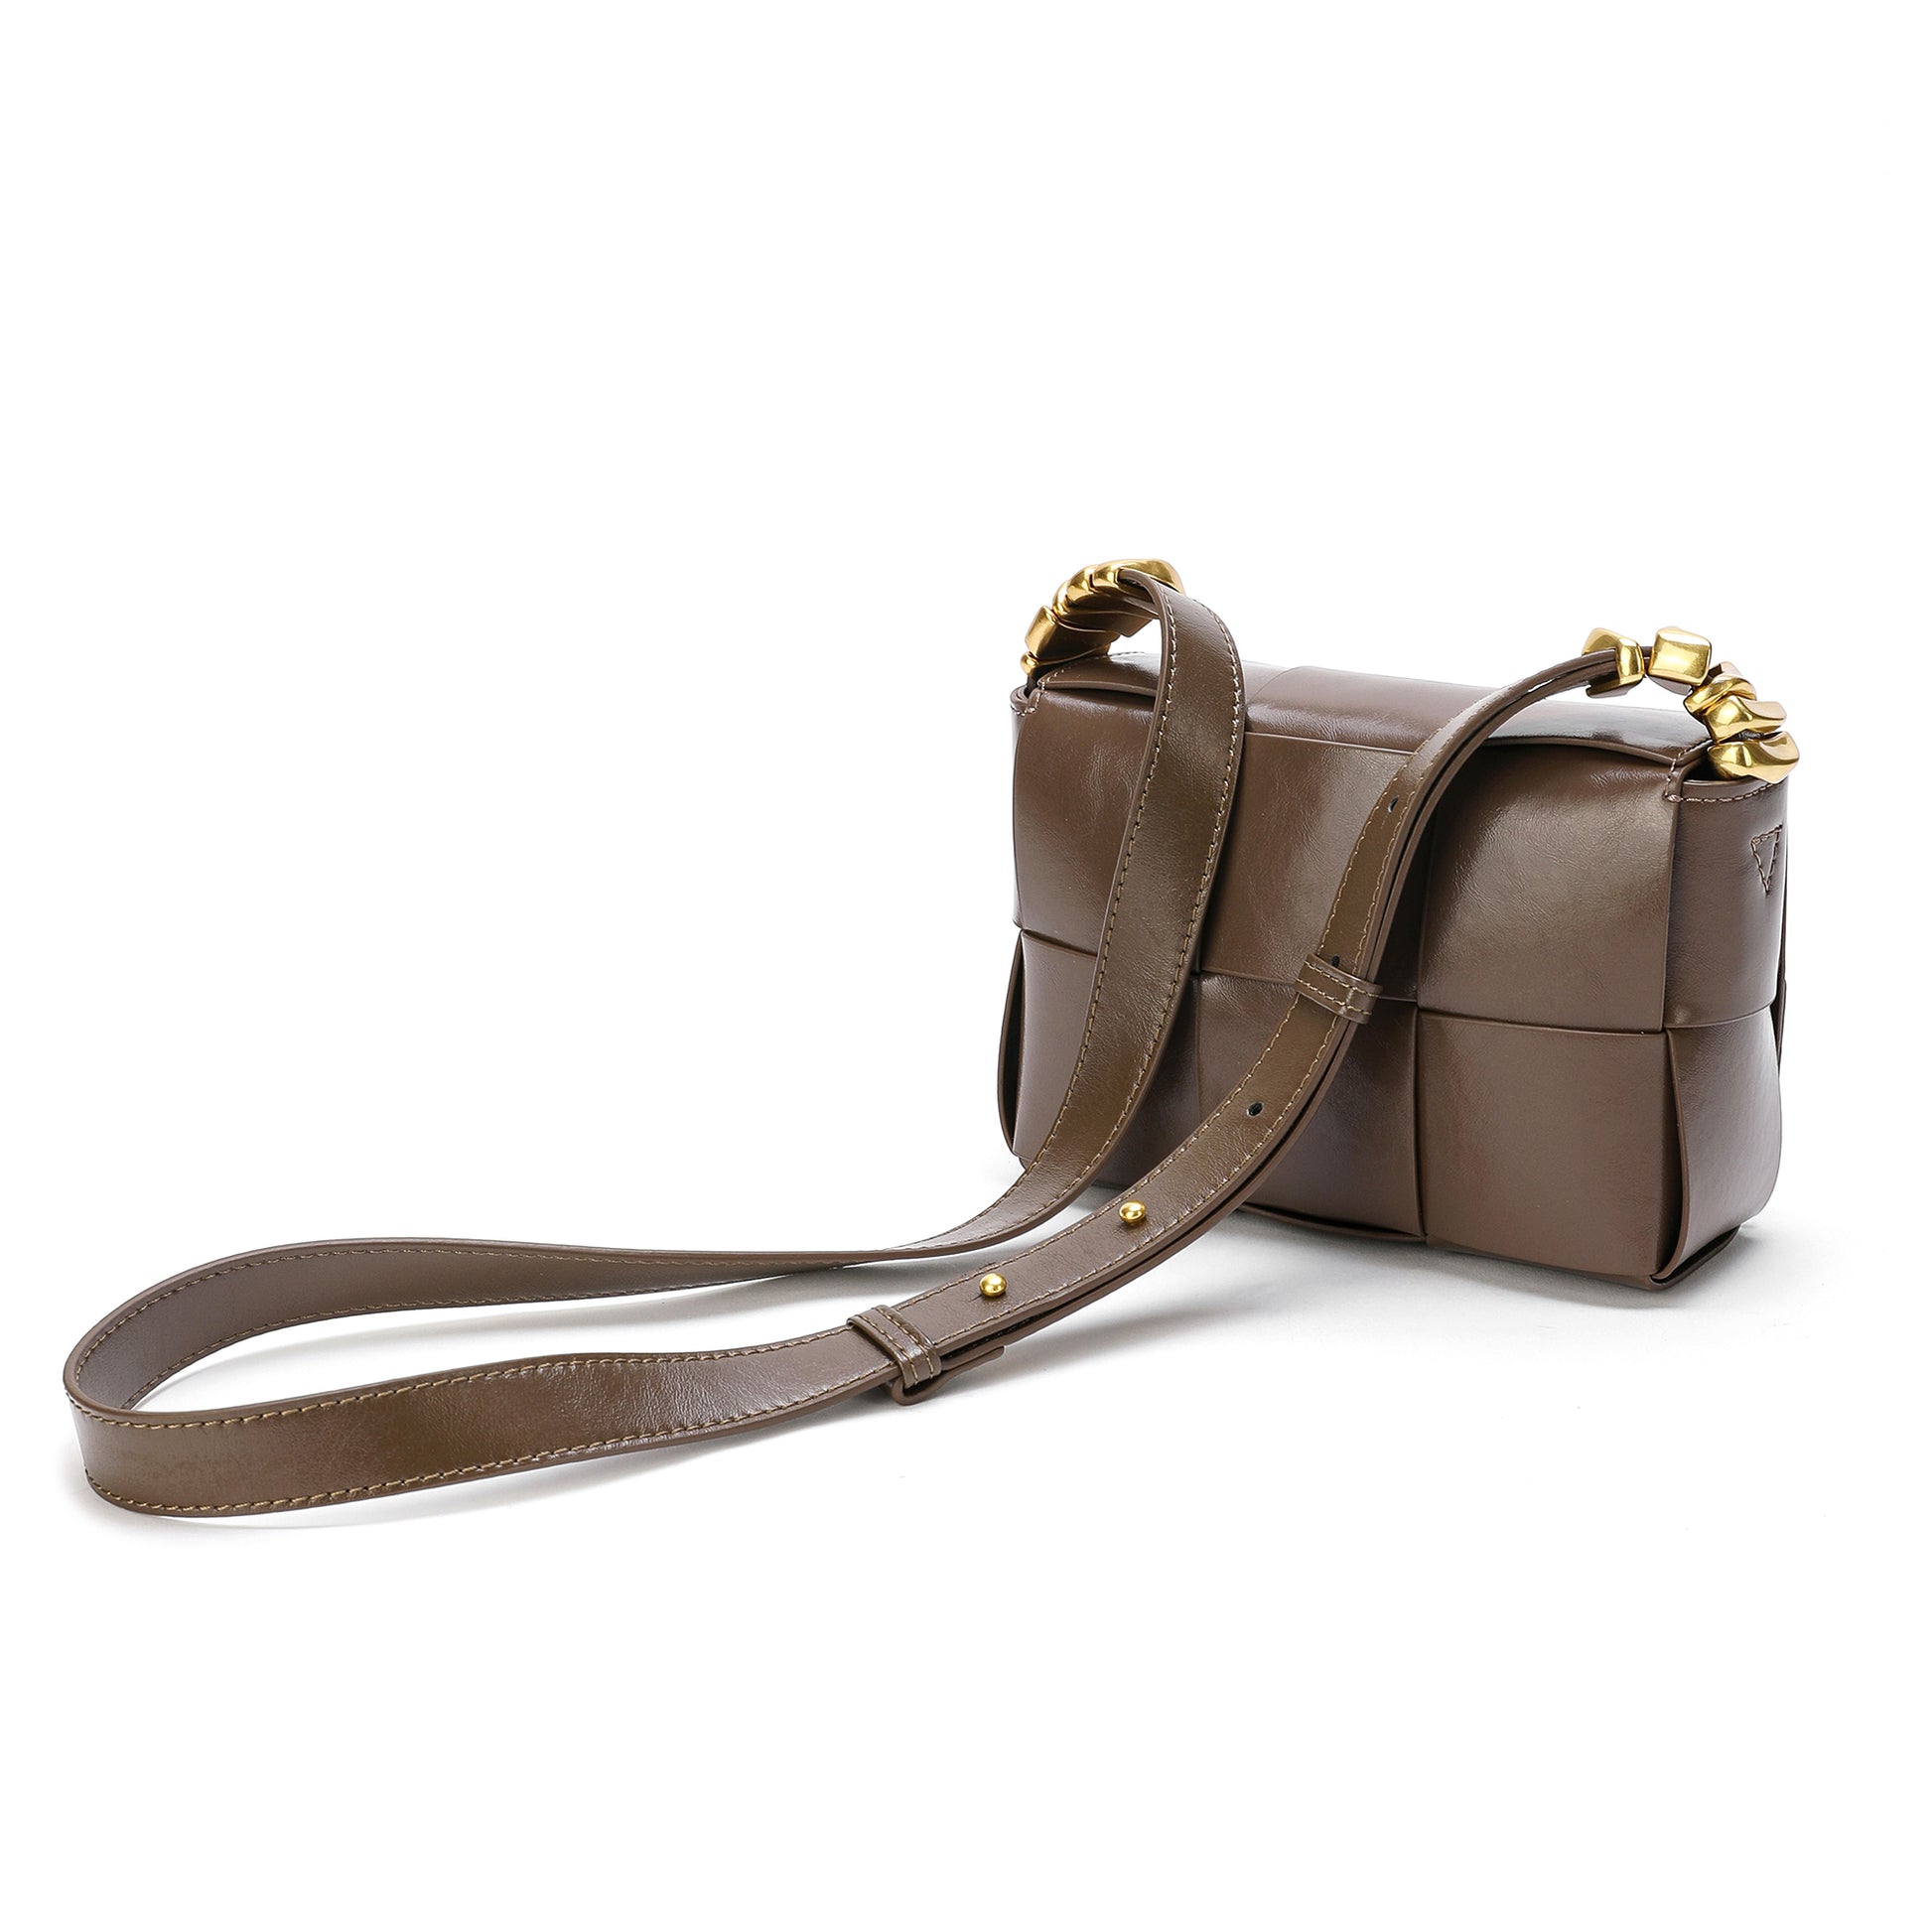 Mint Woven Leather Crossbody Bag